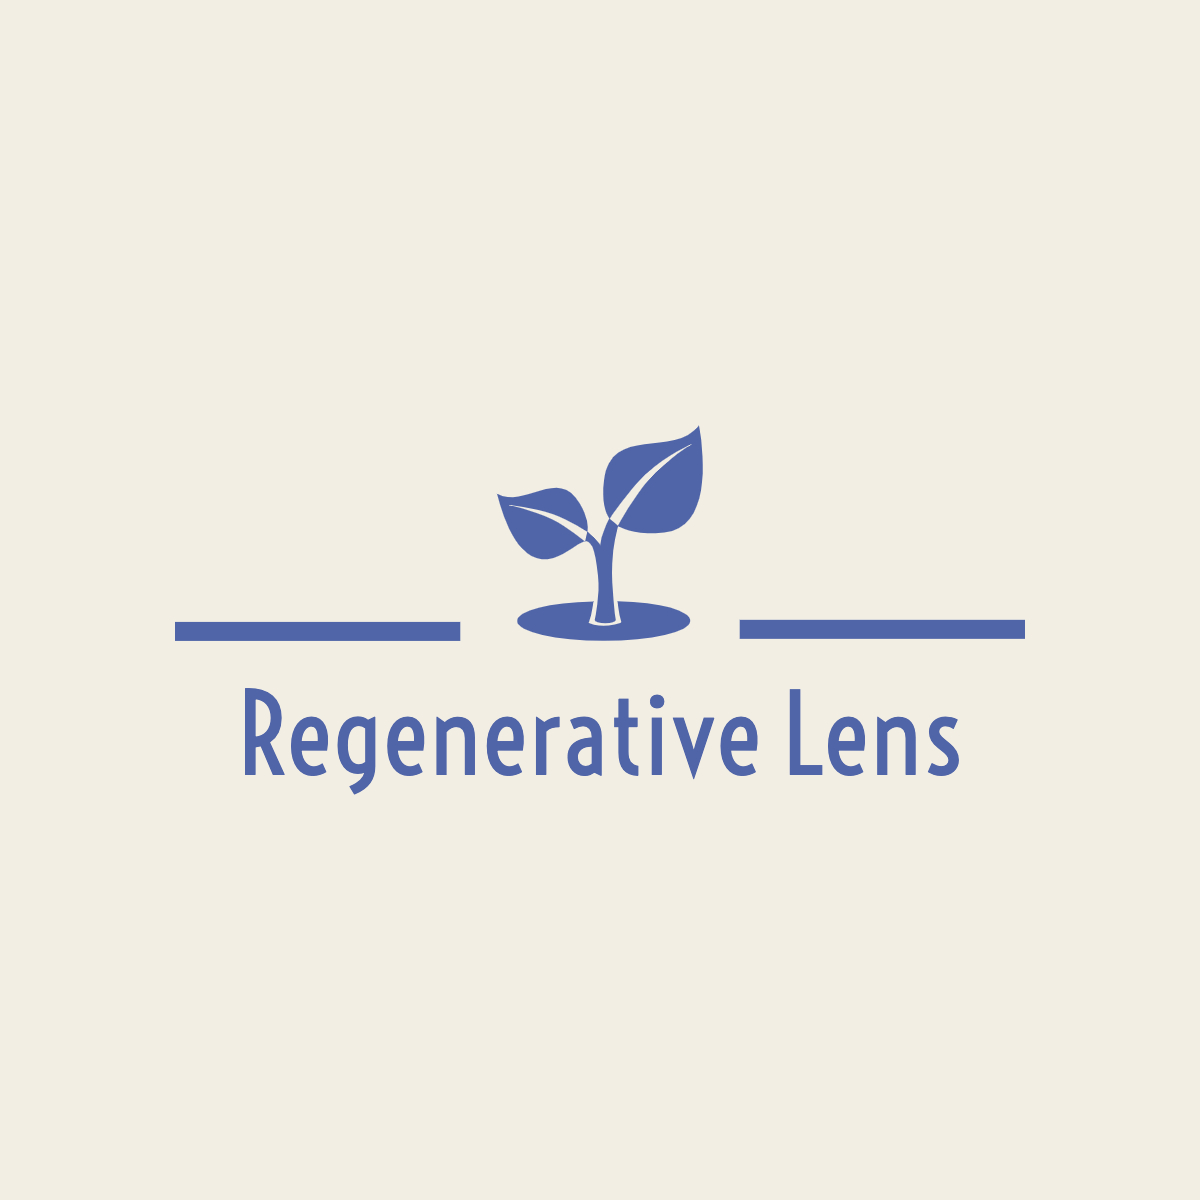 Regenerative Lens showcase